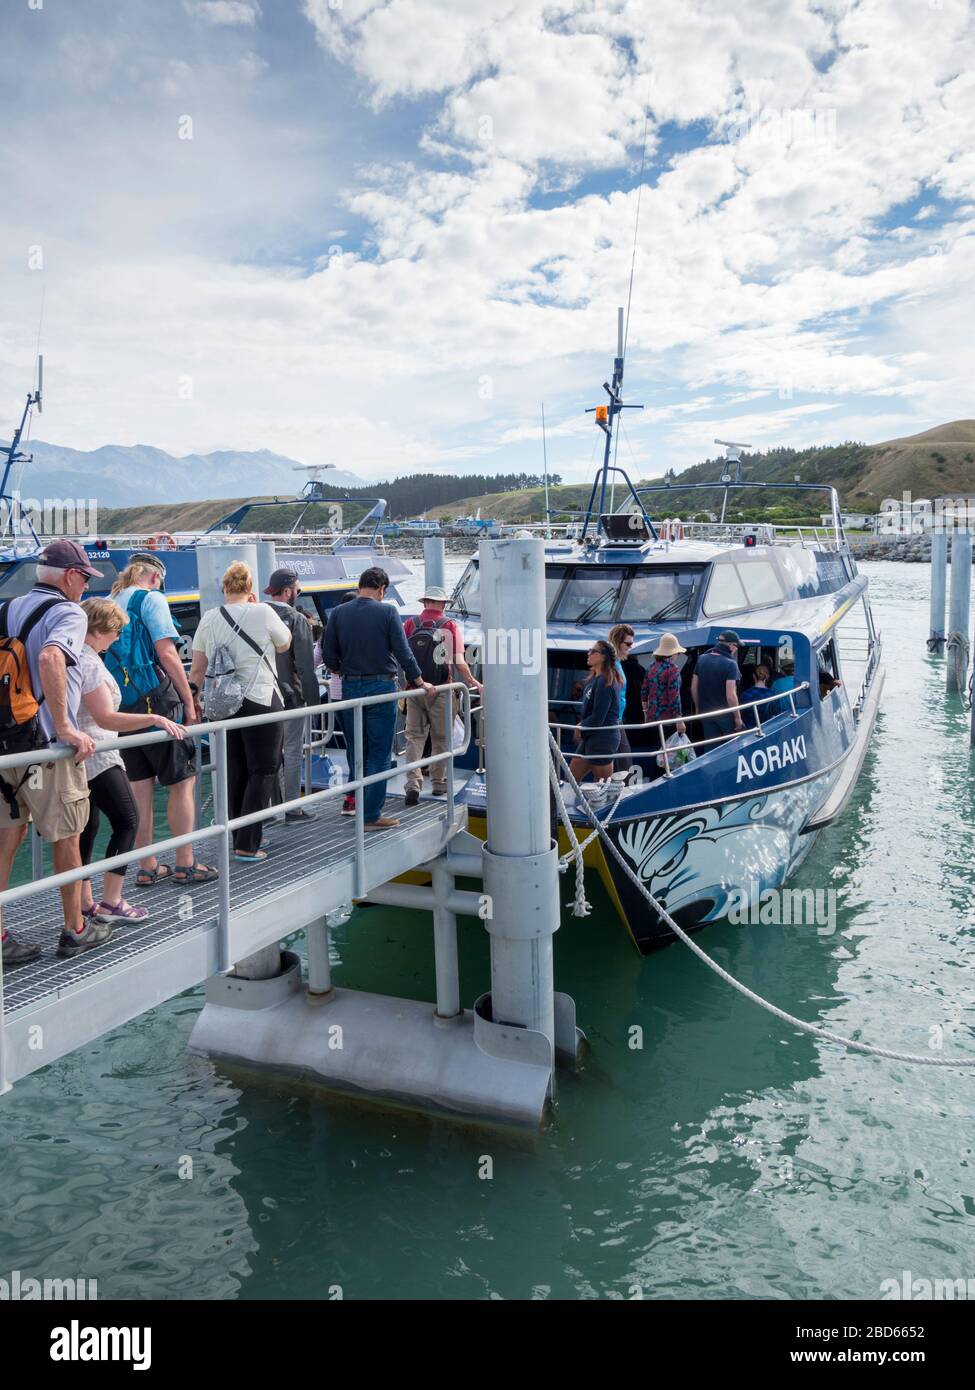 Tourists boarding the boat Aoraki on a whale watching trip in Kaikoura New Zealand Stock Photo